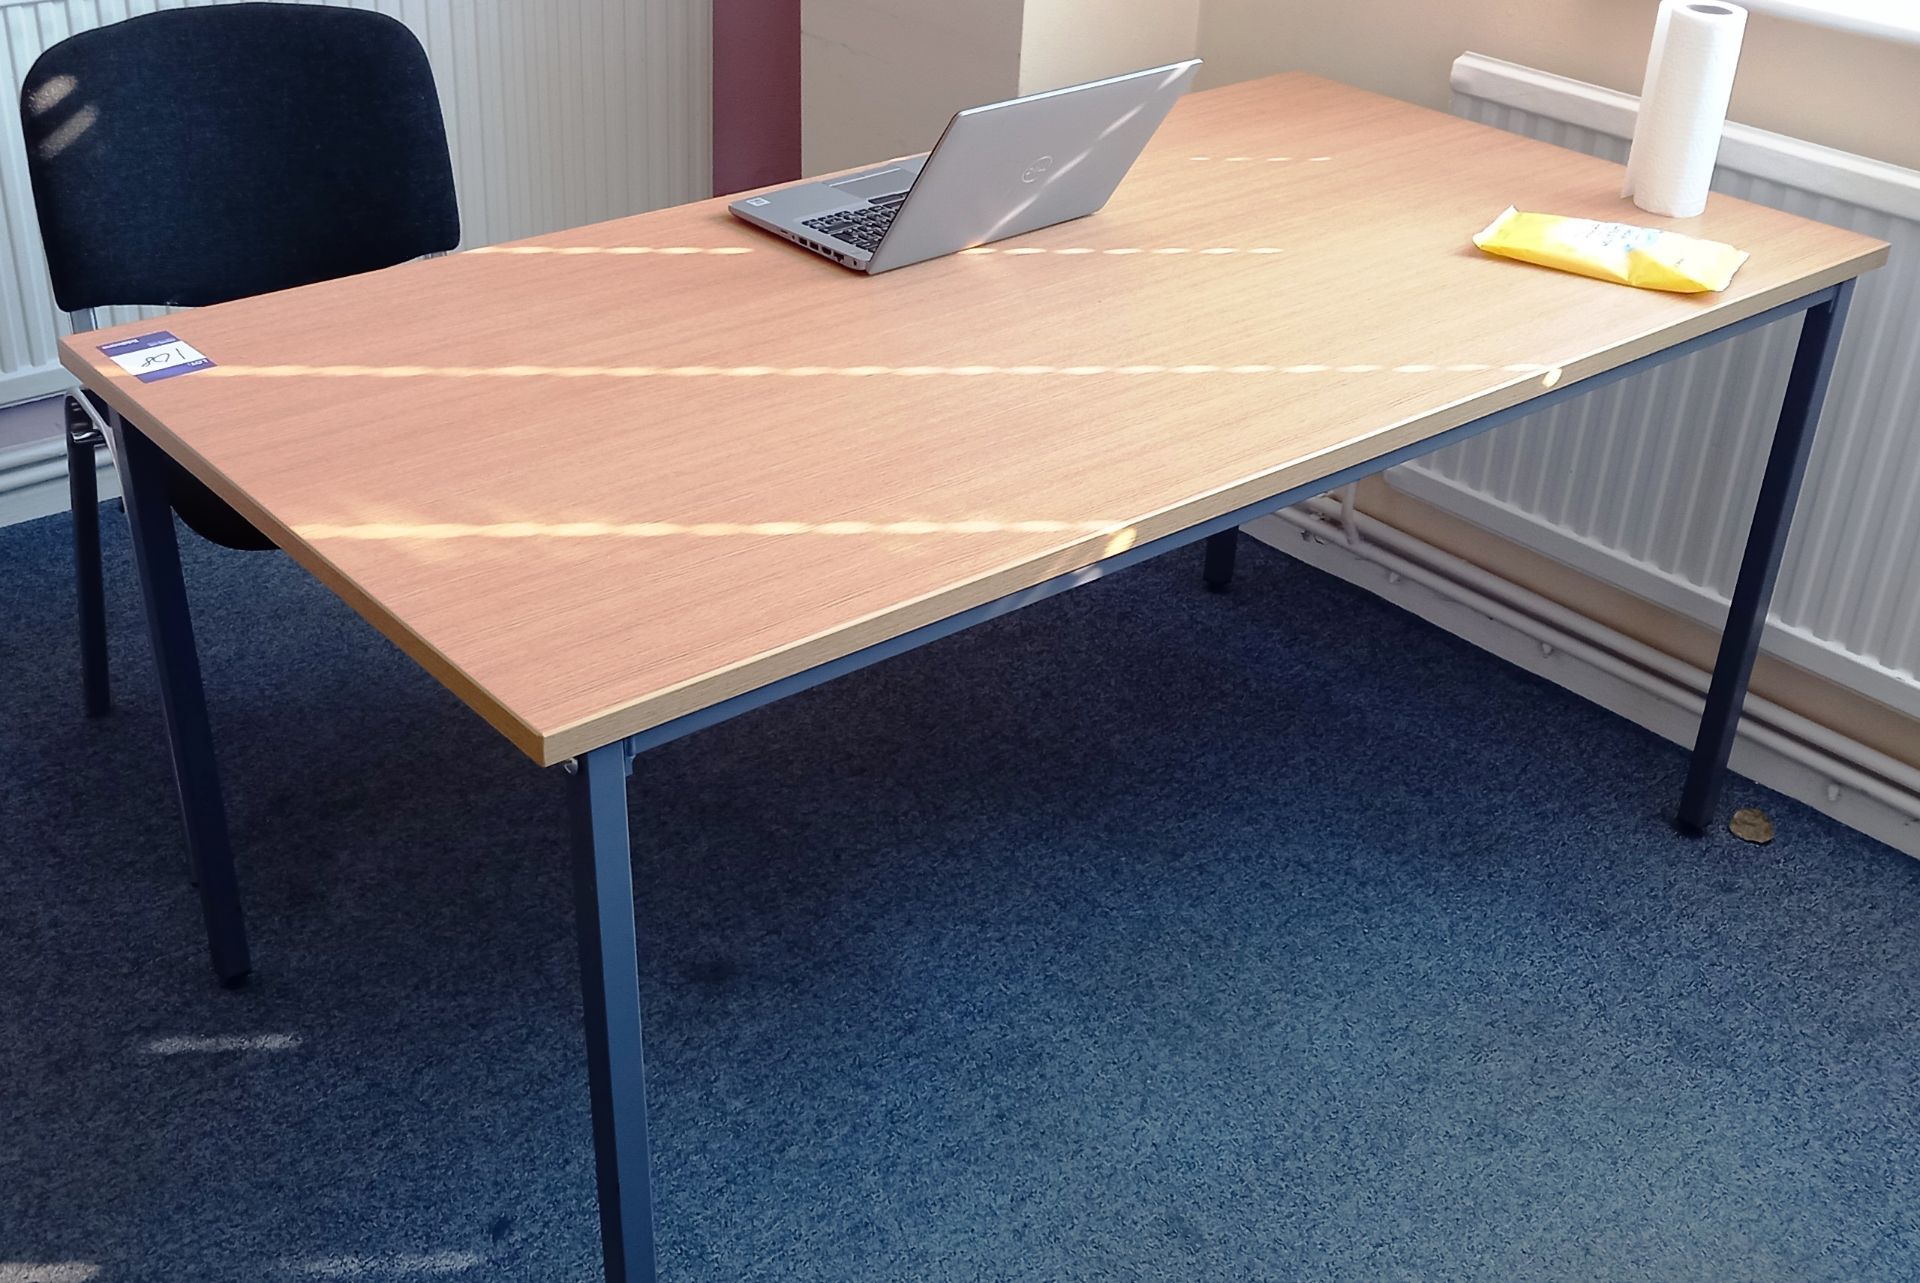 2 x Classroom Desks (1600 x 800) - Image 2 of 2